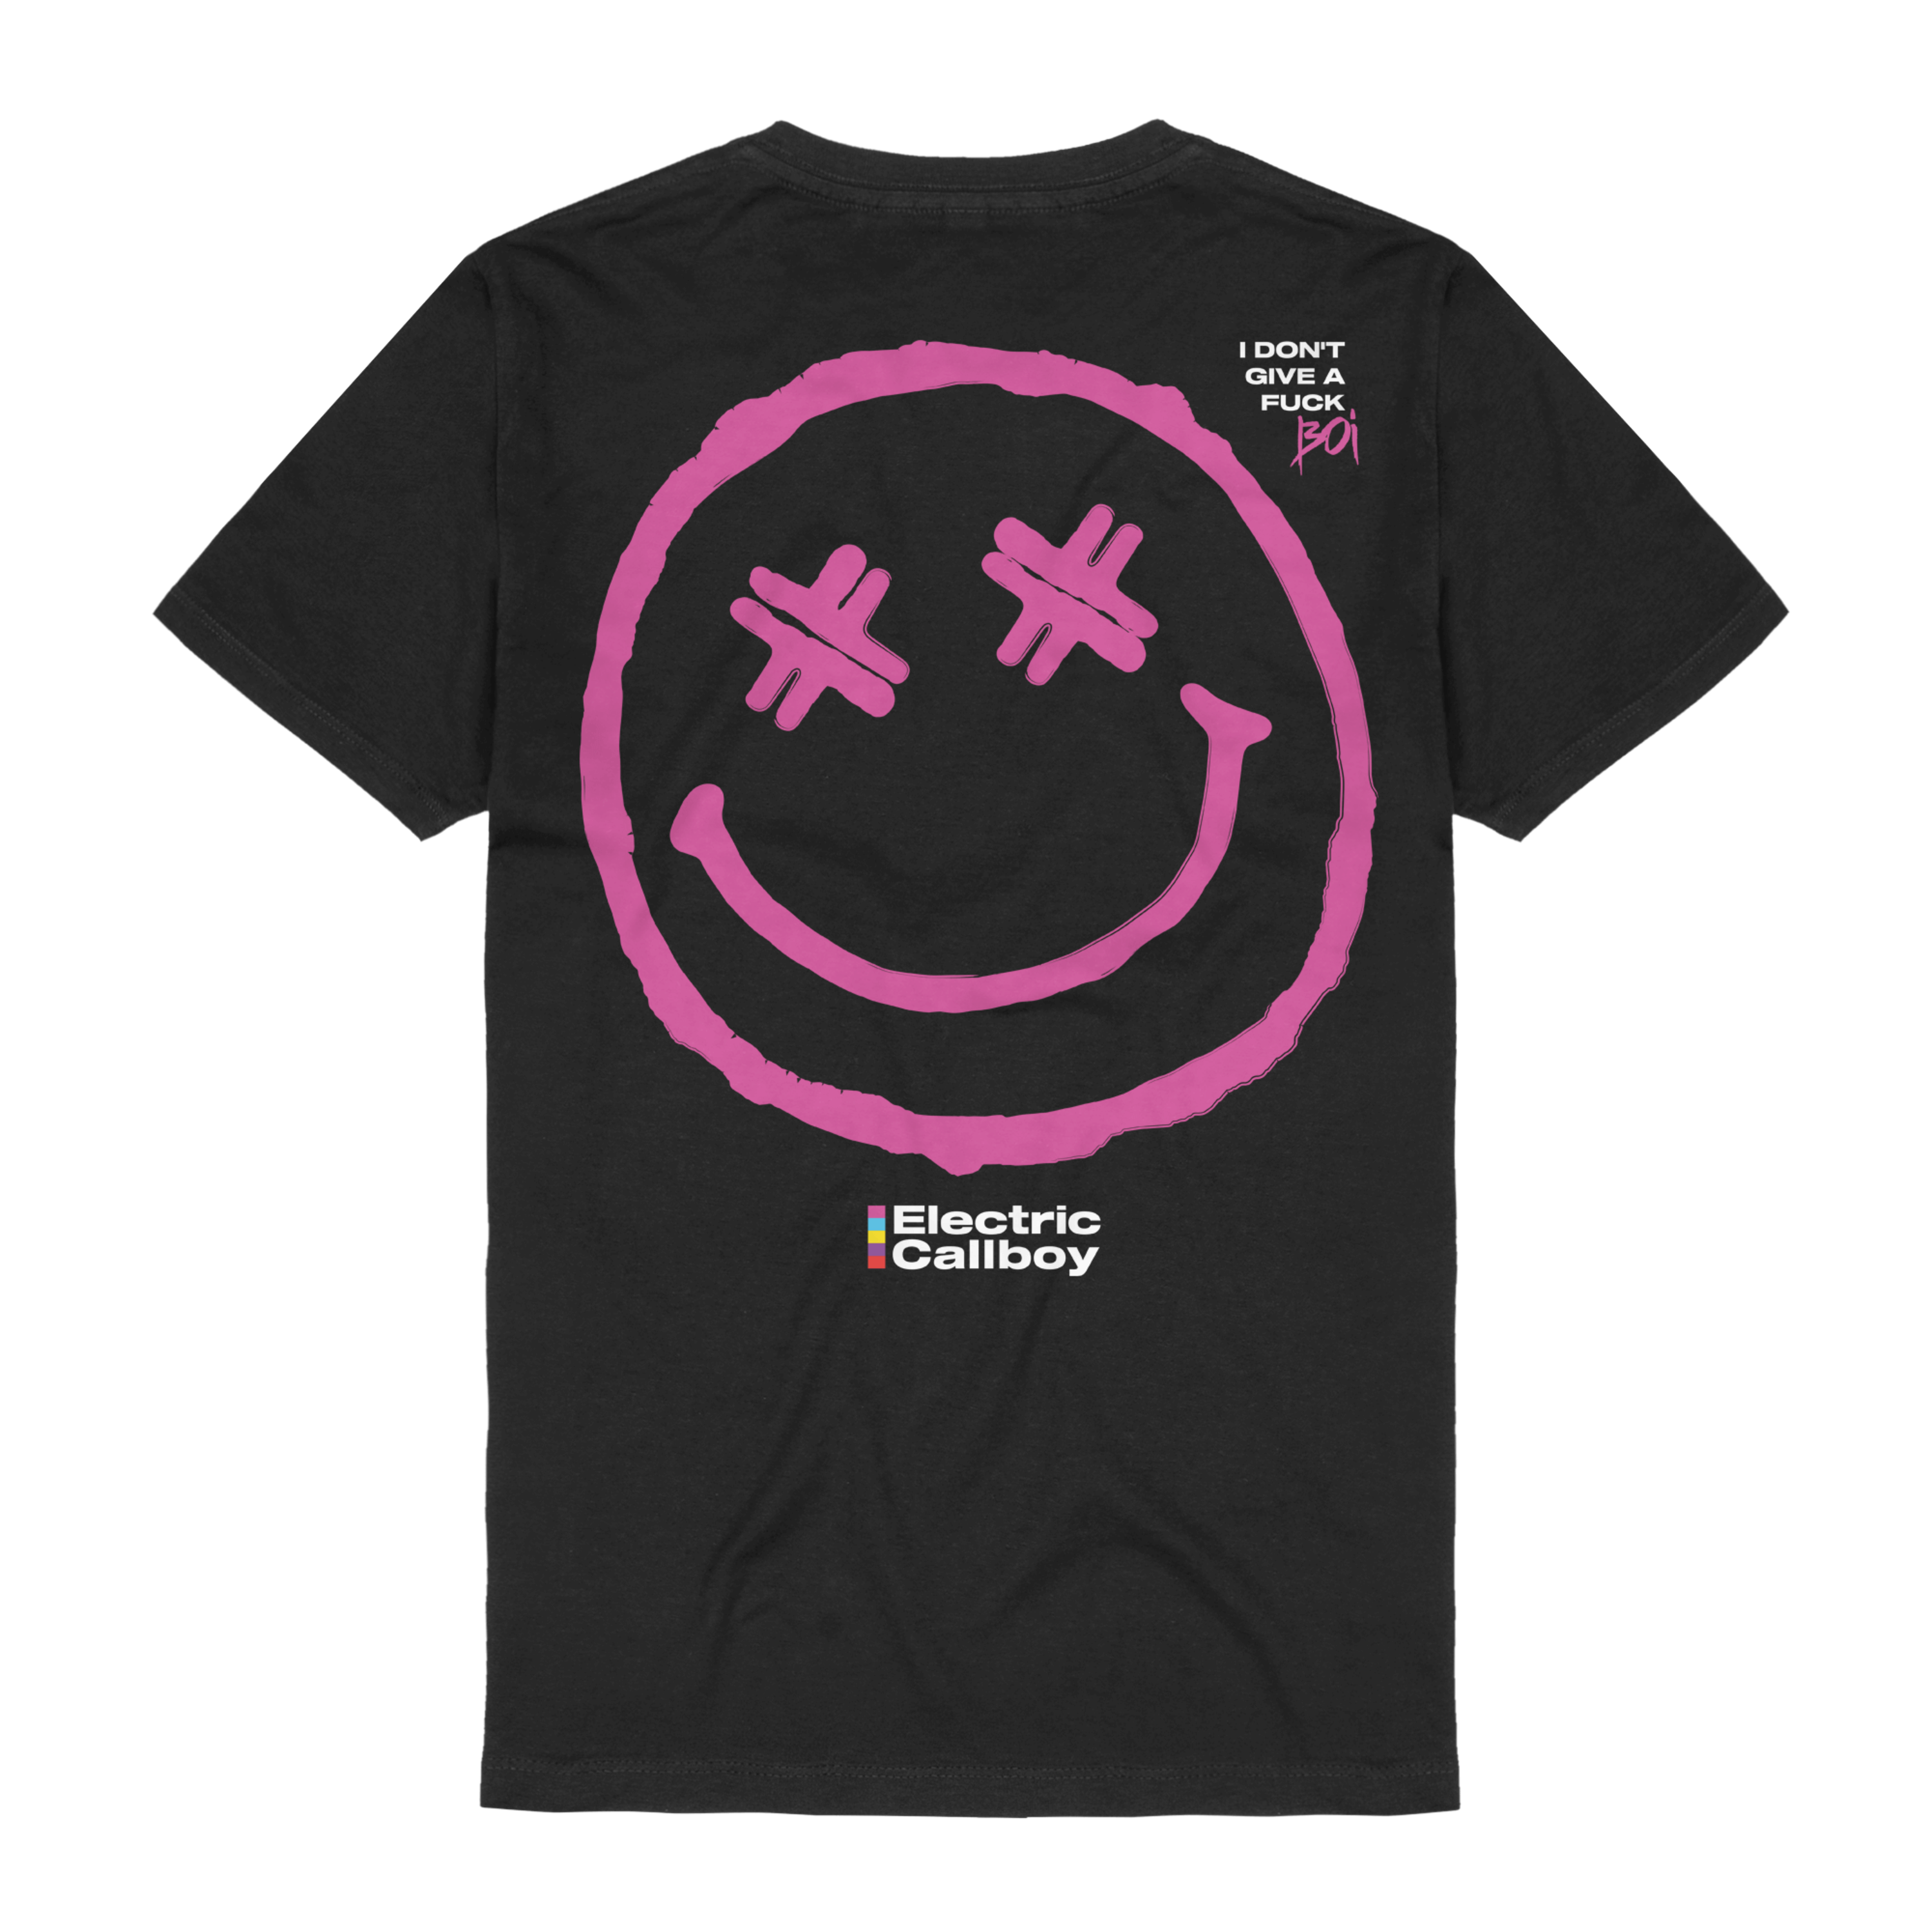 Electric Callboy - Fuckboi Smile T-Shirt